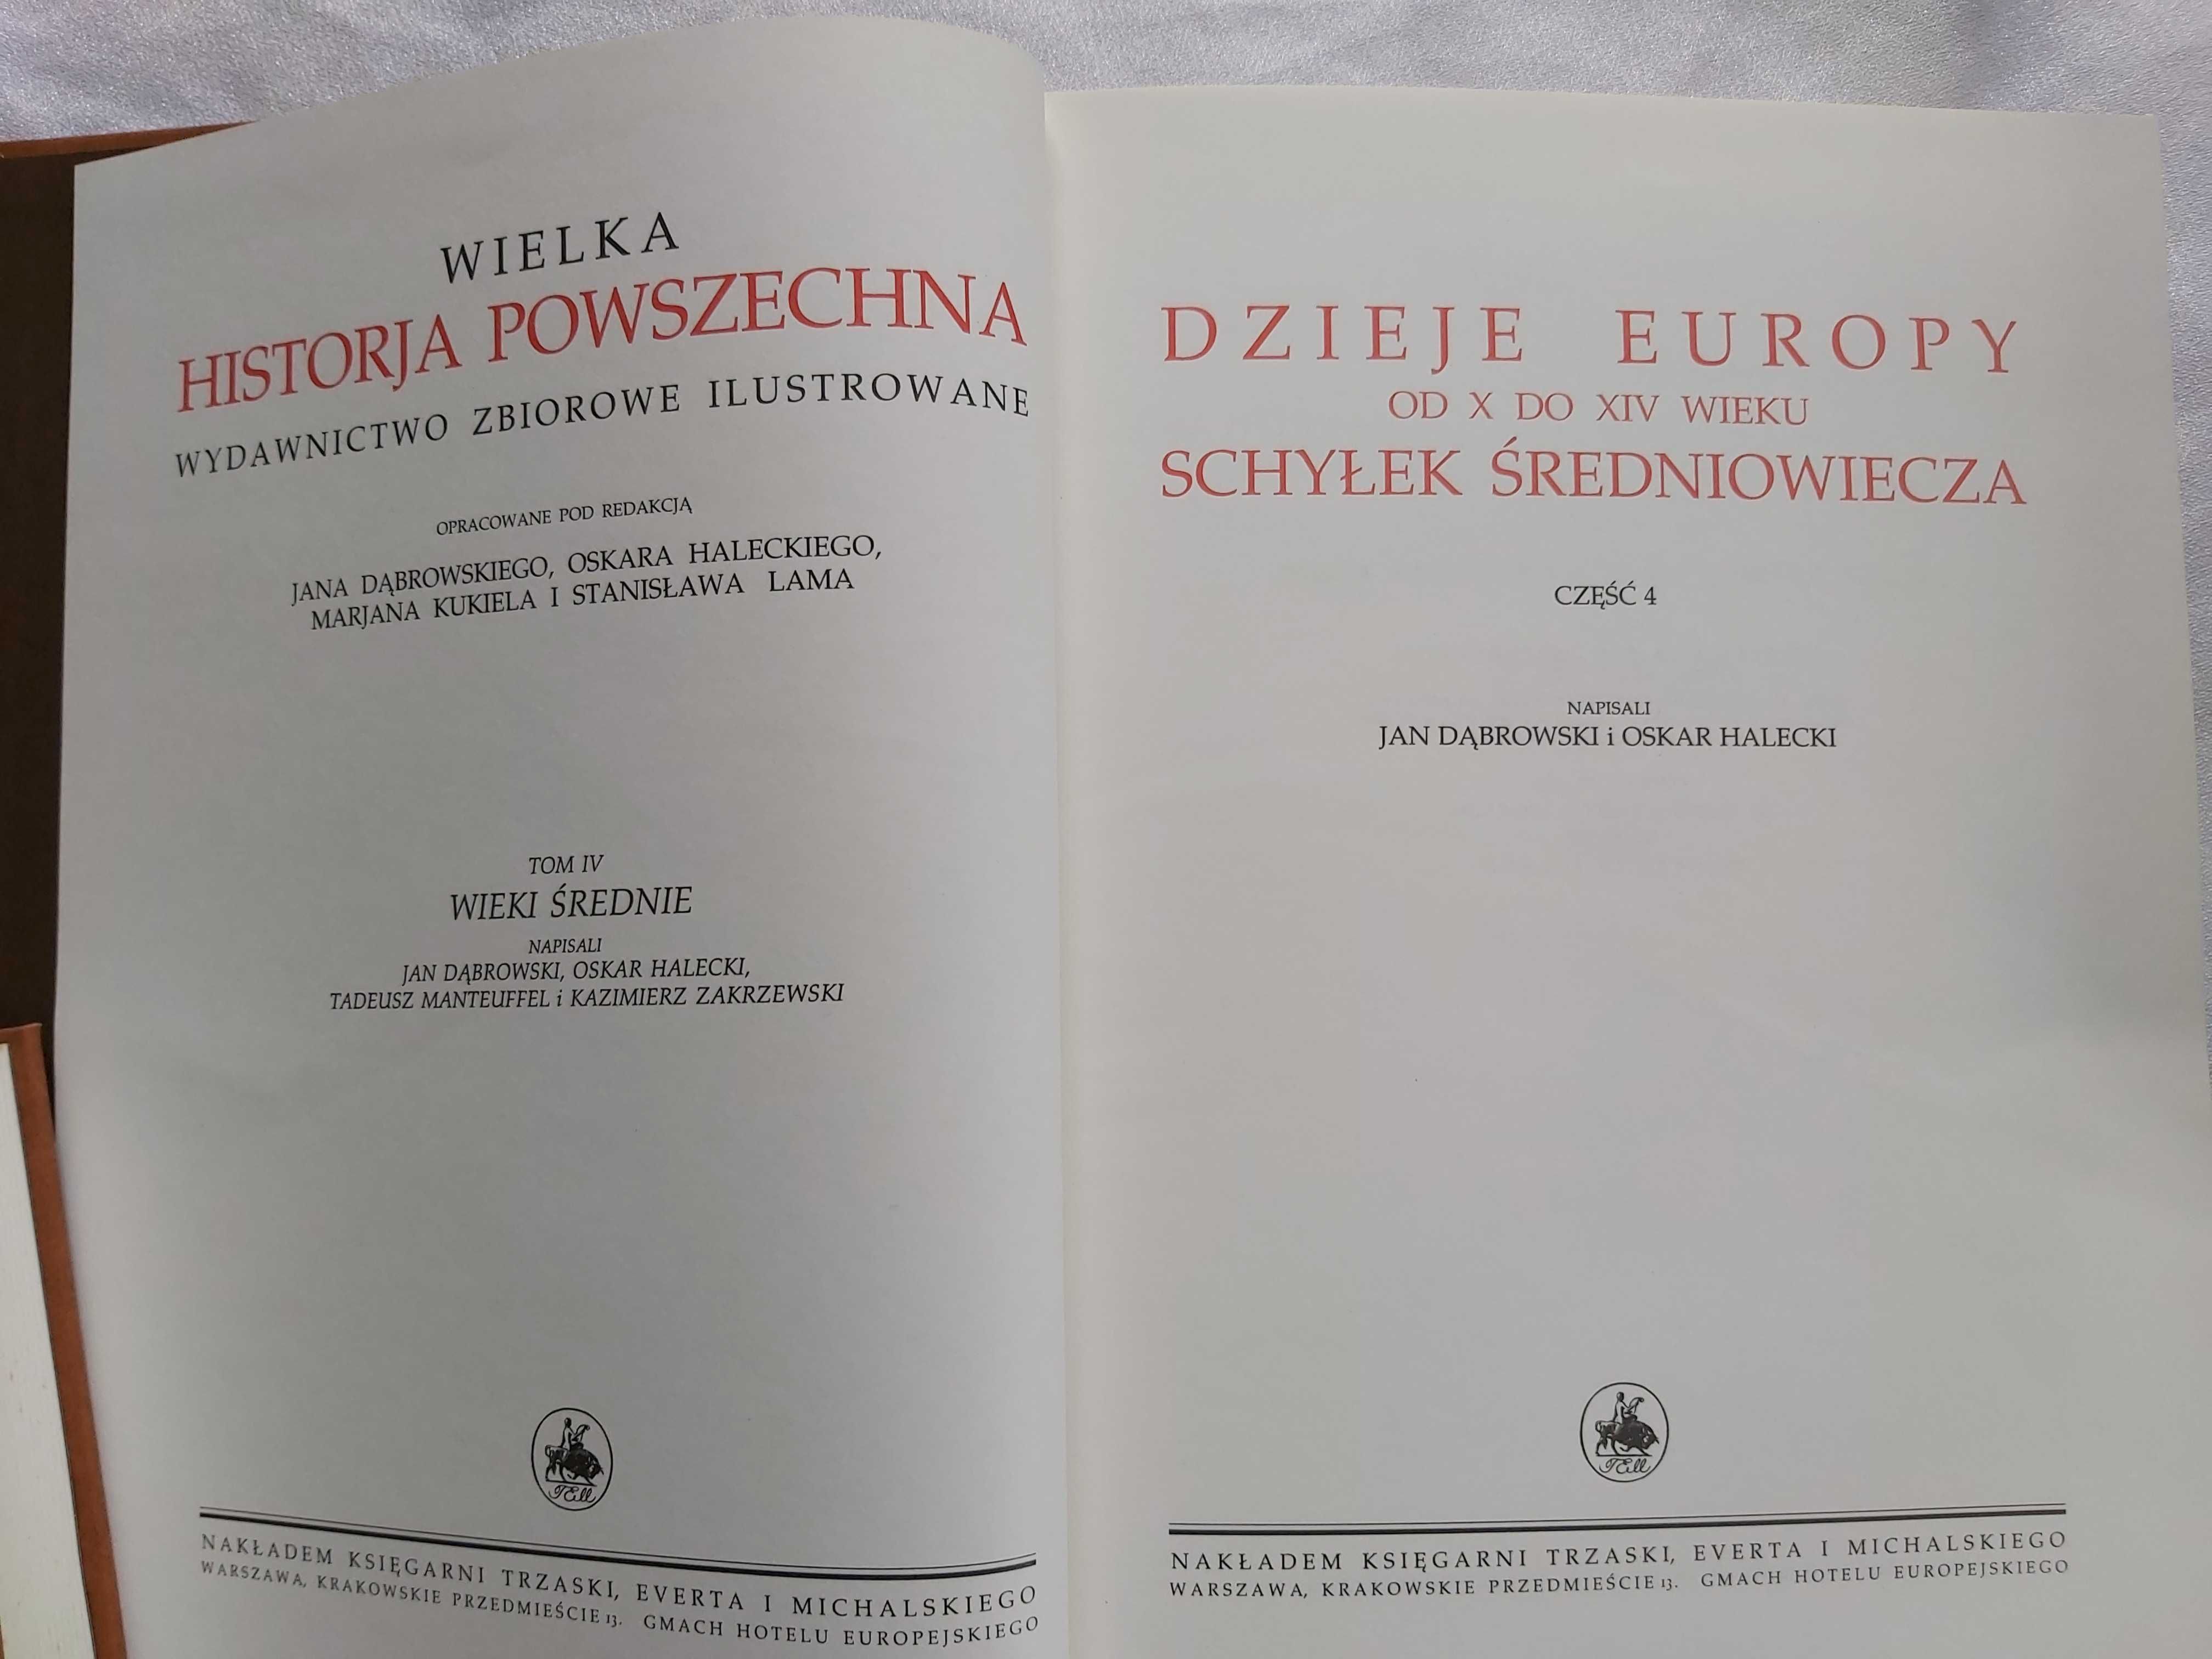 Wielka Historja Powszechna - Trzaska, Evert, Michalski